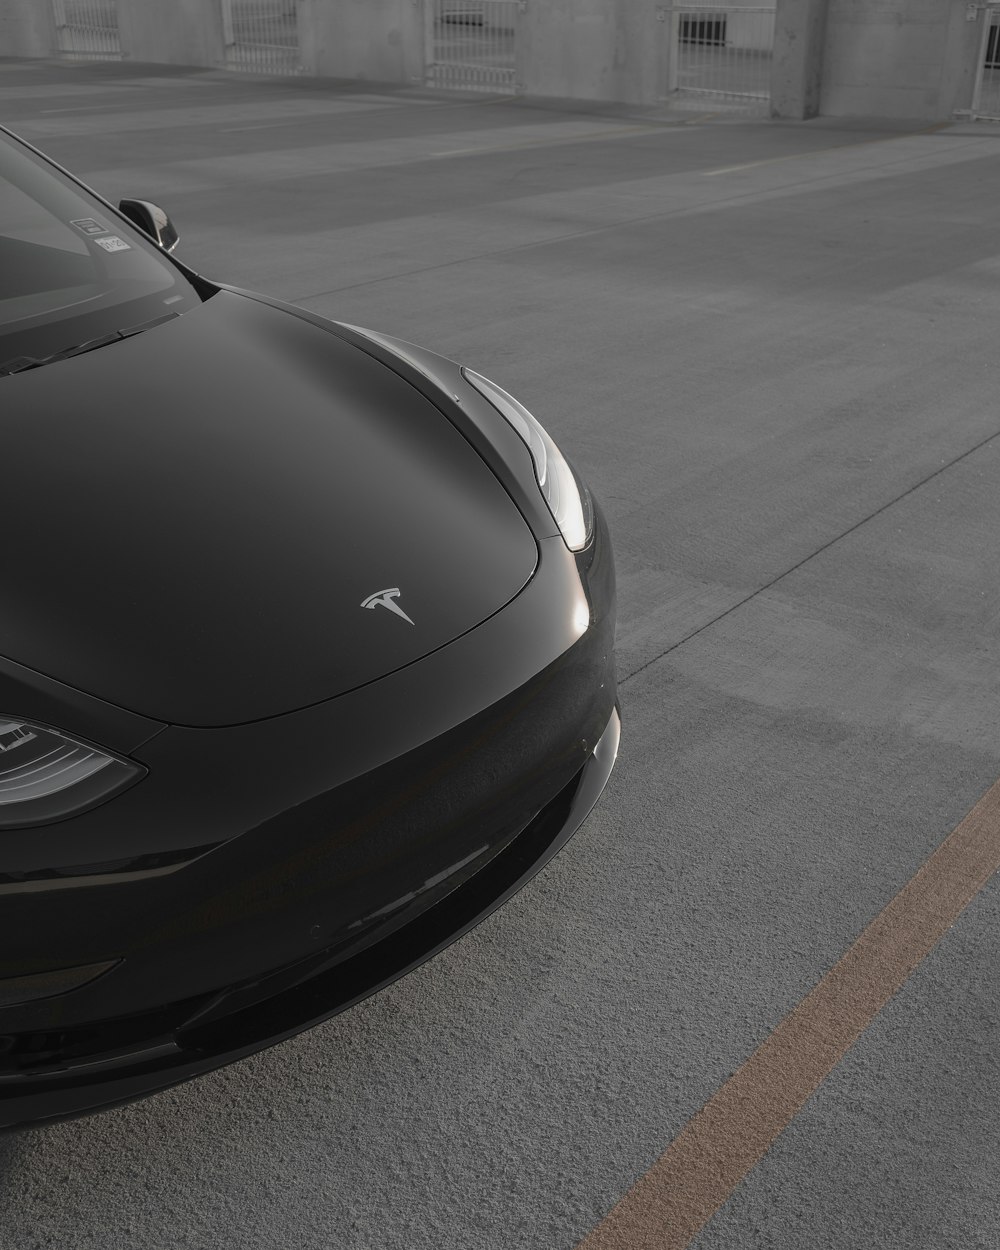 black Tesla car